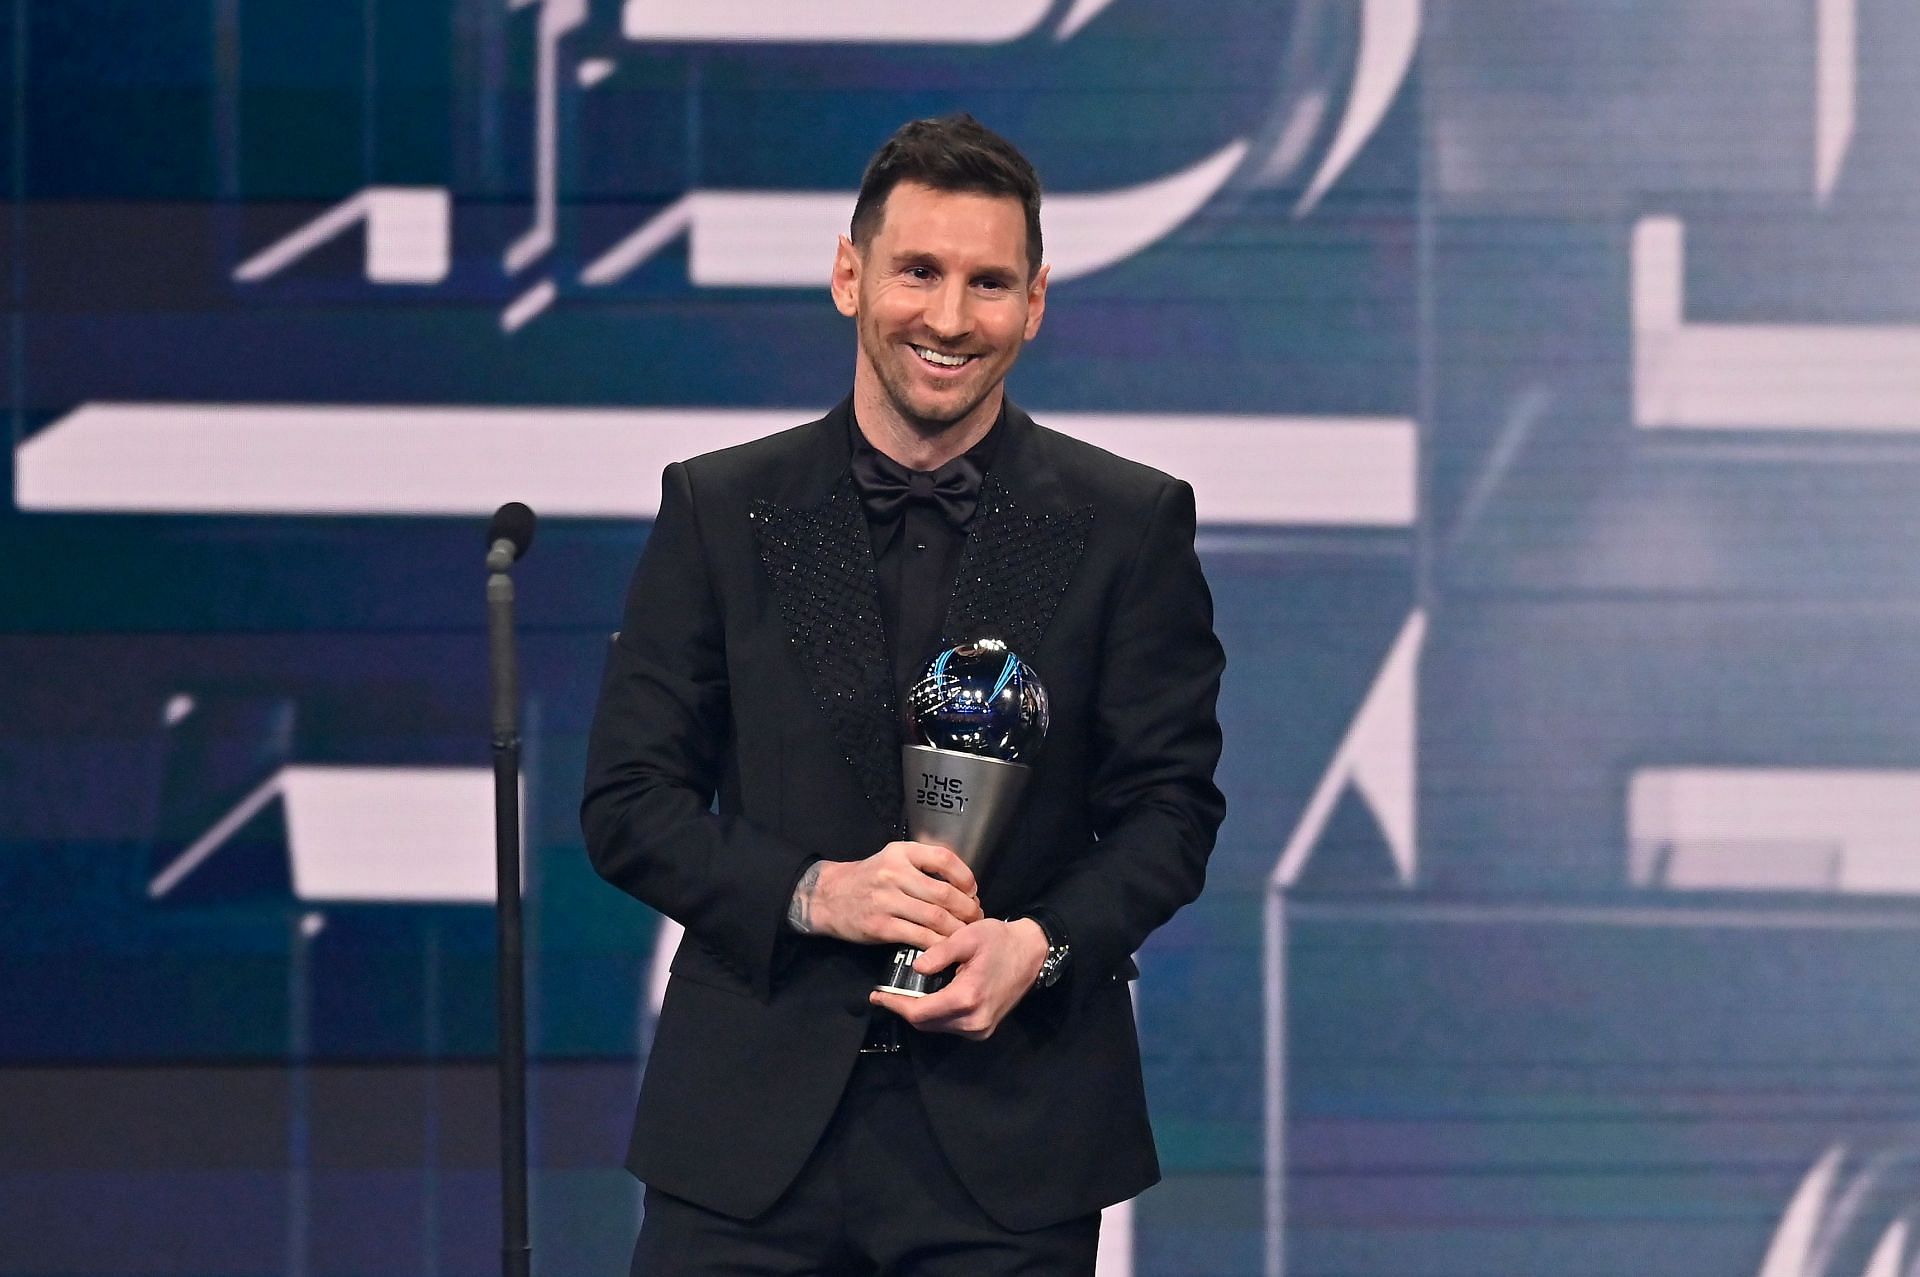 The Best FIFA Football Awards 2022 - Show